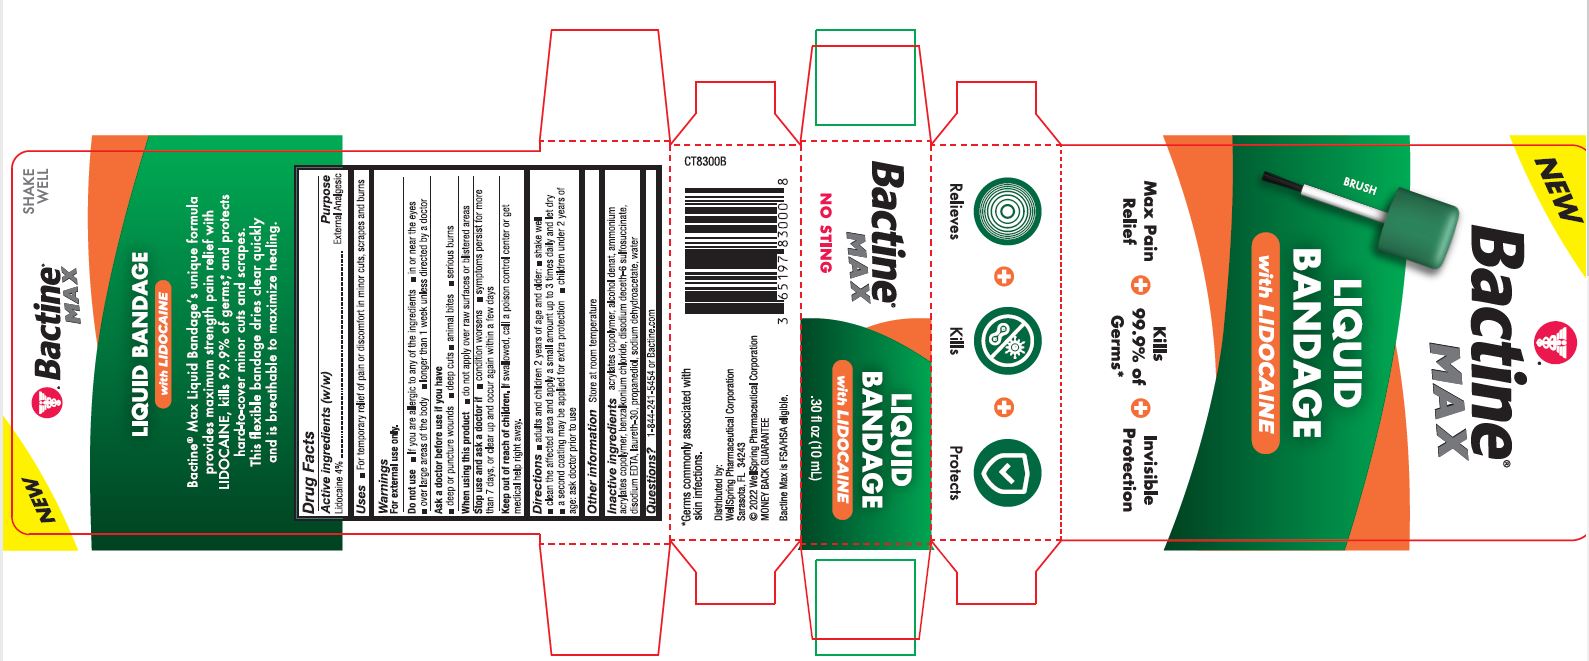 Bactine Max Liquid Bandage with Lidocaine - Box